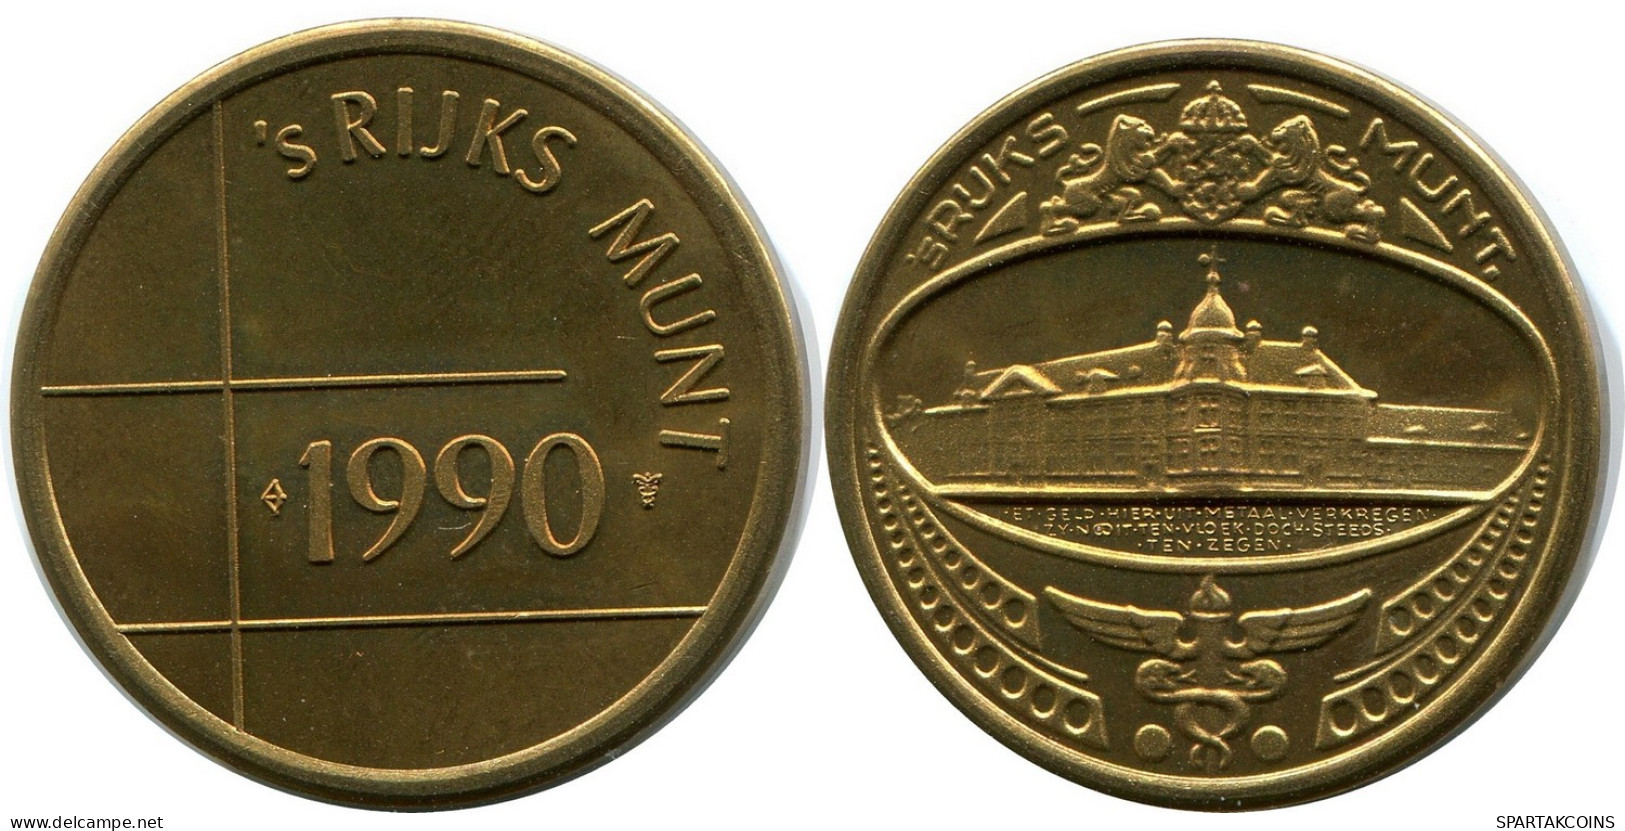 1990 ROYAL DUTCH MINT SET TOKEN NÉERLANDAIS NETHERLANDS MINT (From BU Mint Set) #AH029.F - Mint Sets & Proof Sets